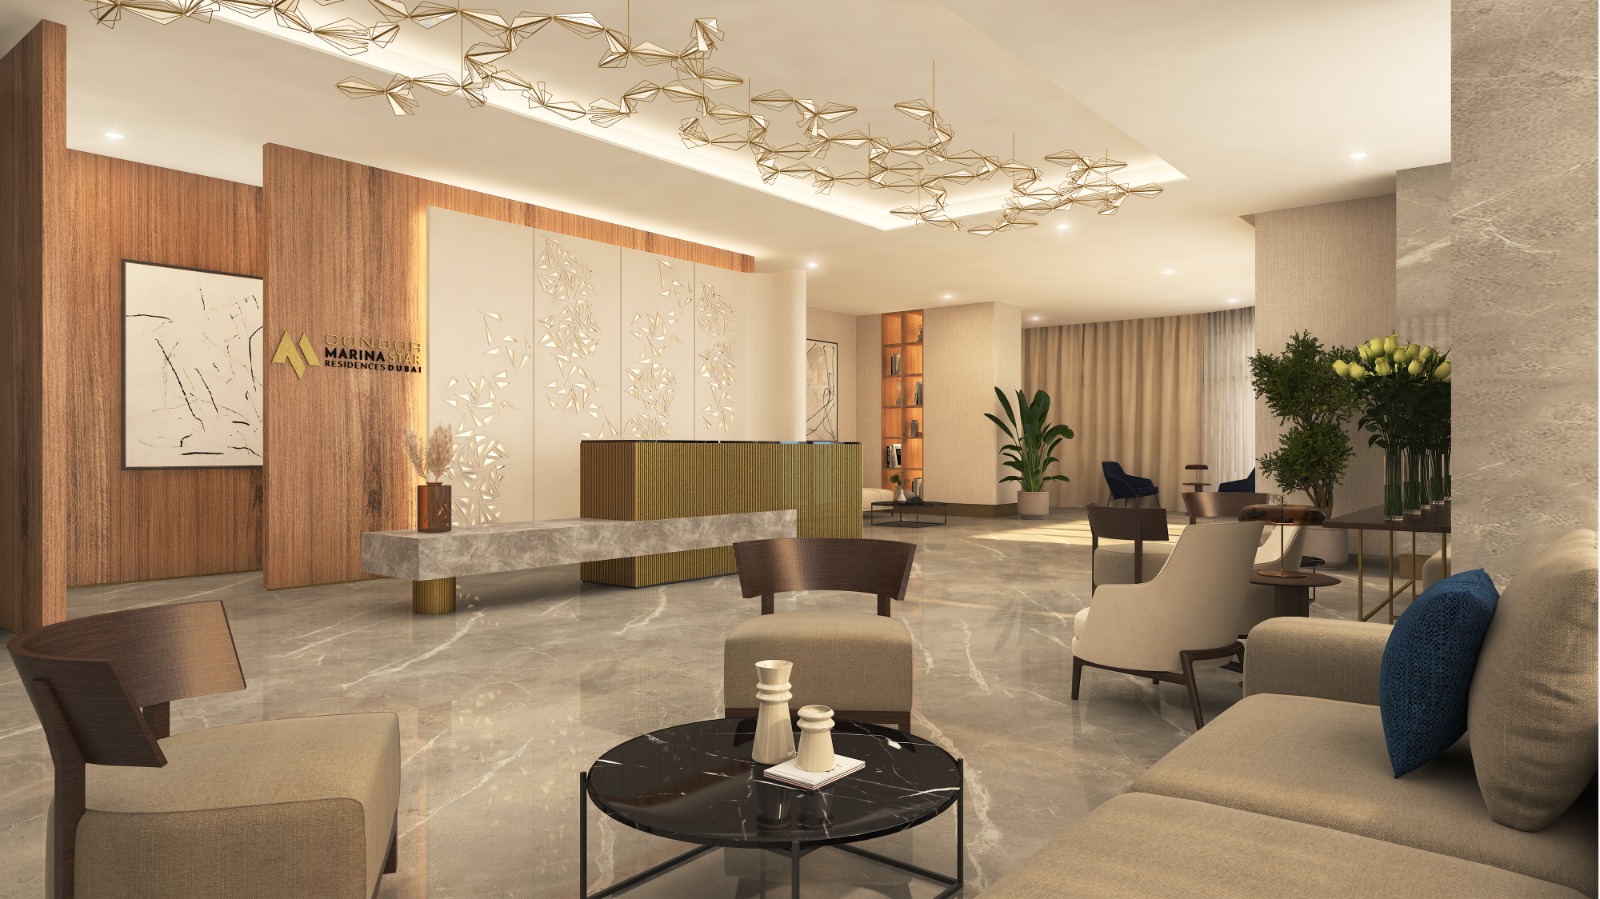 Marina Star,luxury apartments for sale in Dubai